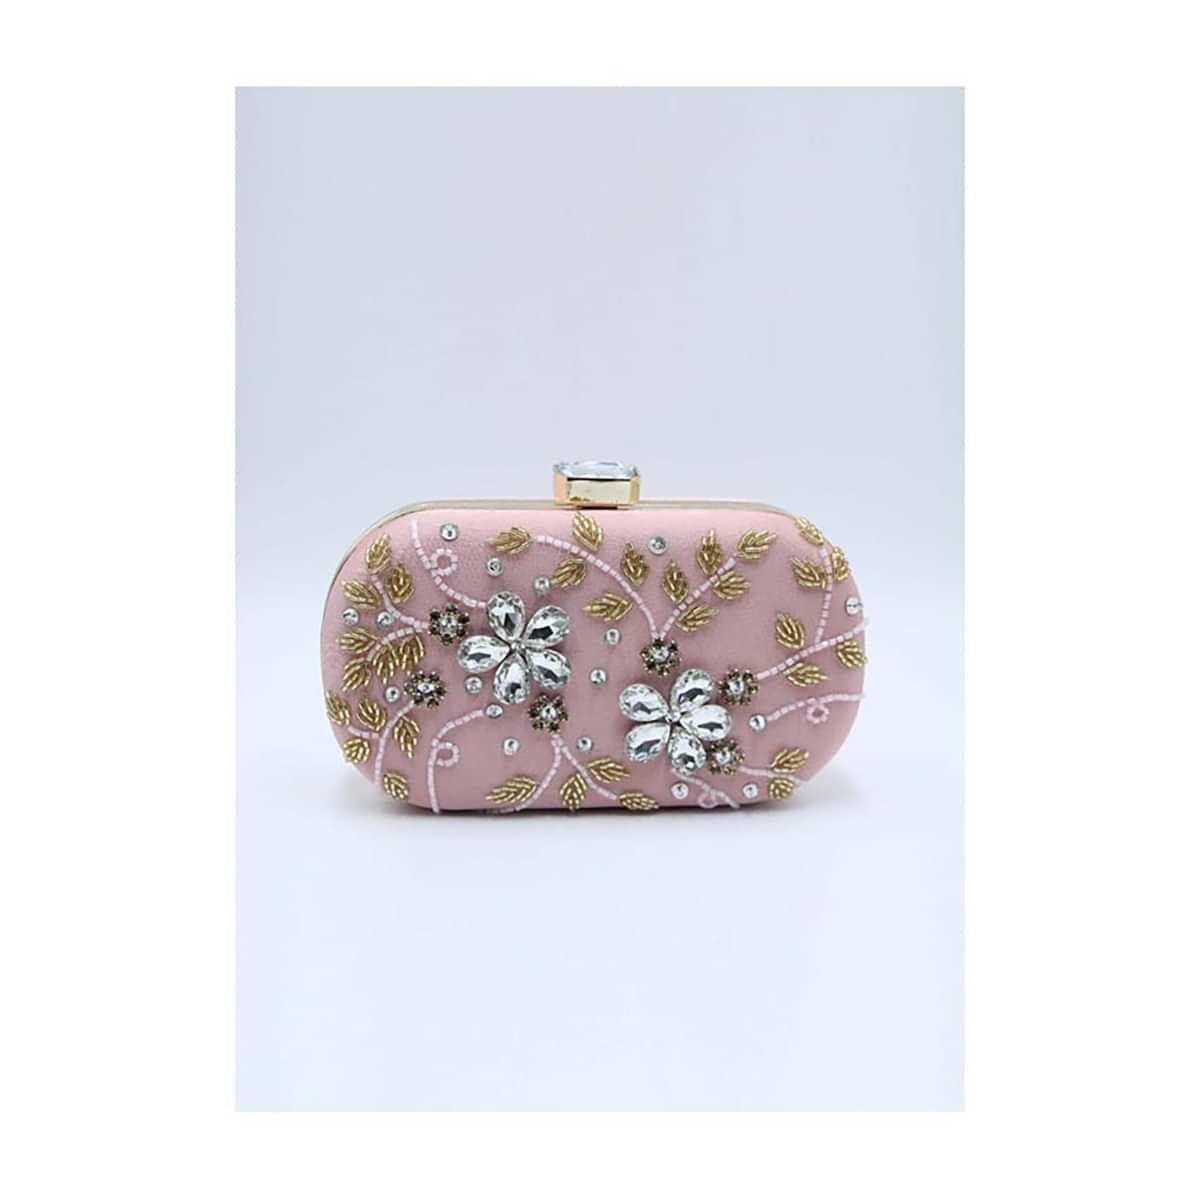 Floral diamond baby pink sling clutch bag only on Kalki